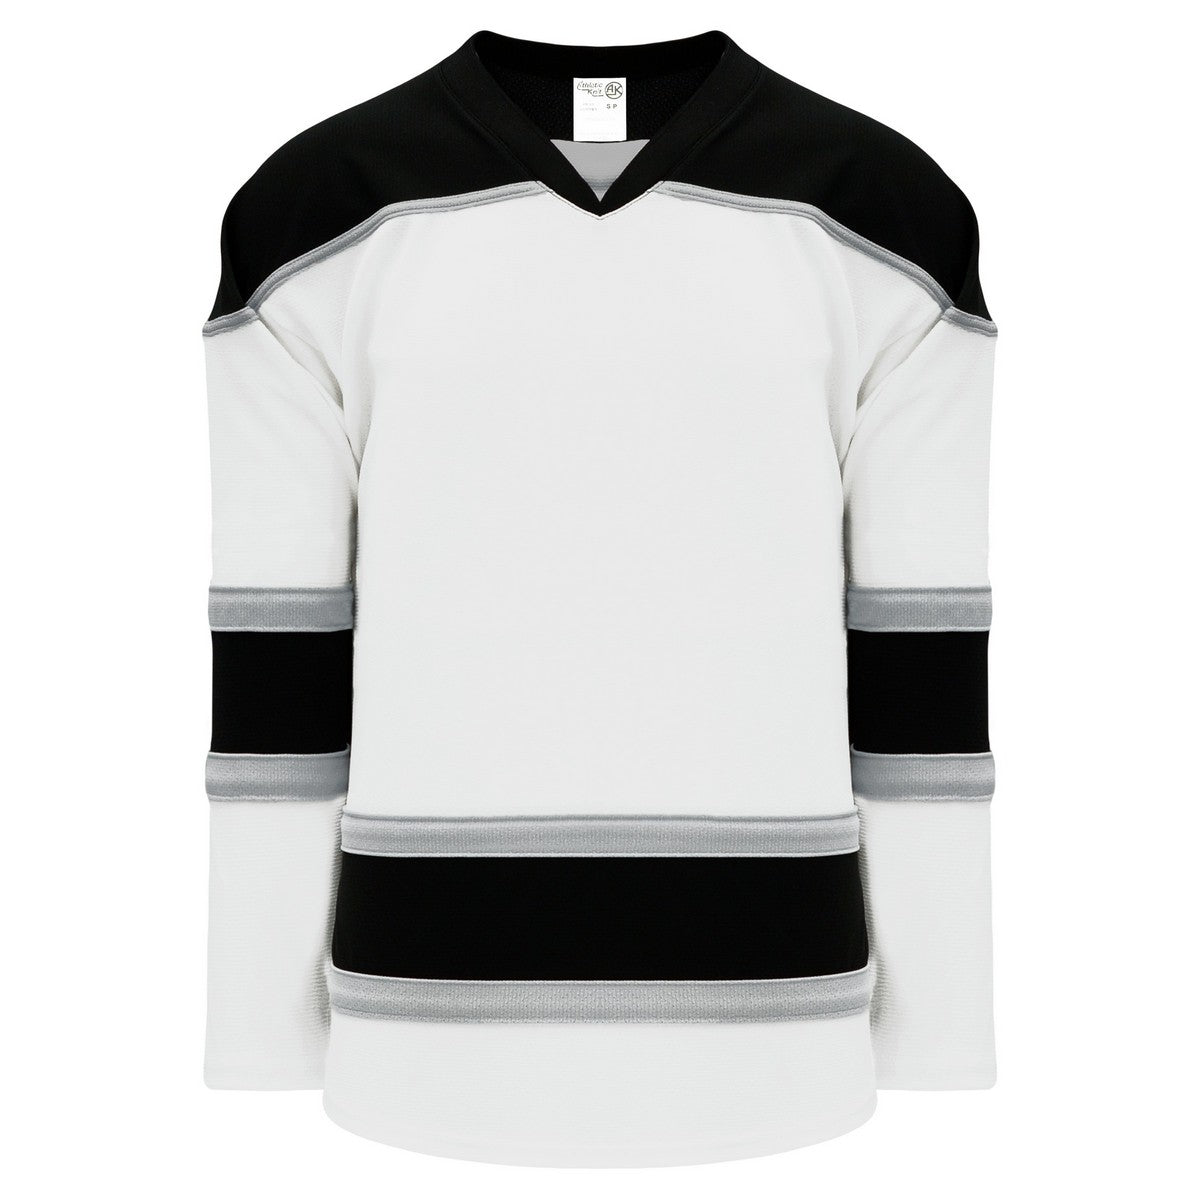 Select Series H7500 Jersey White-Black